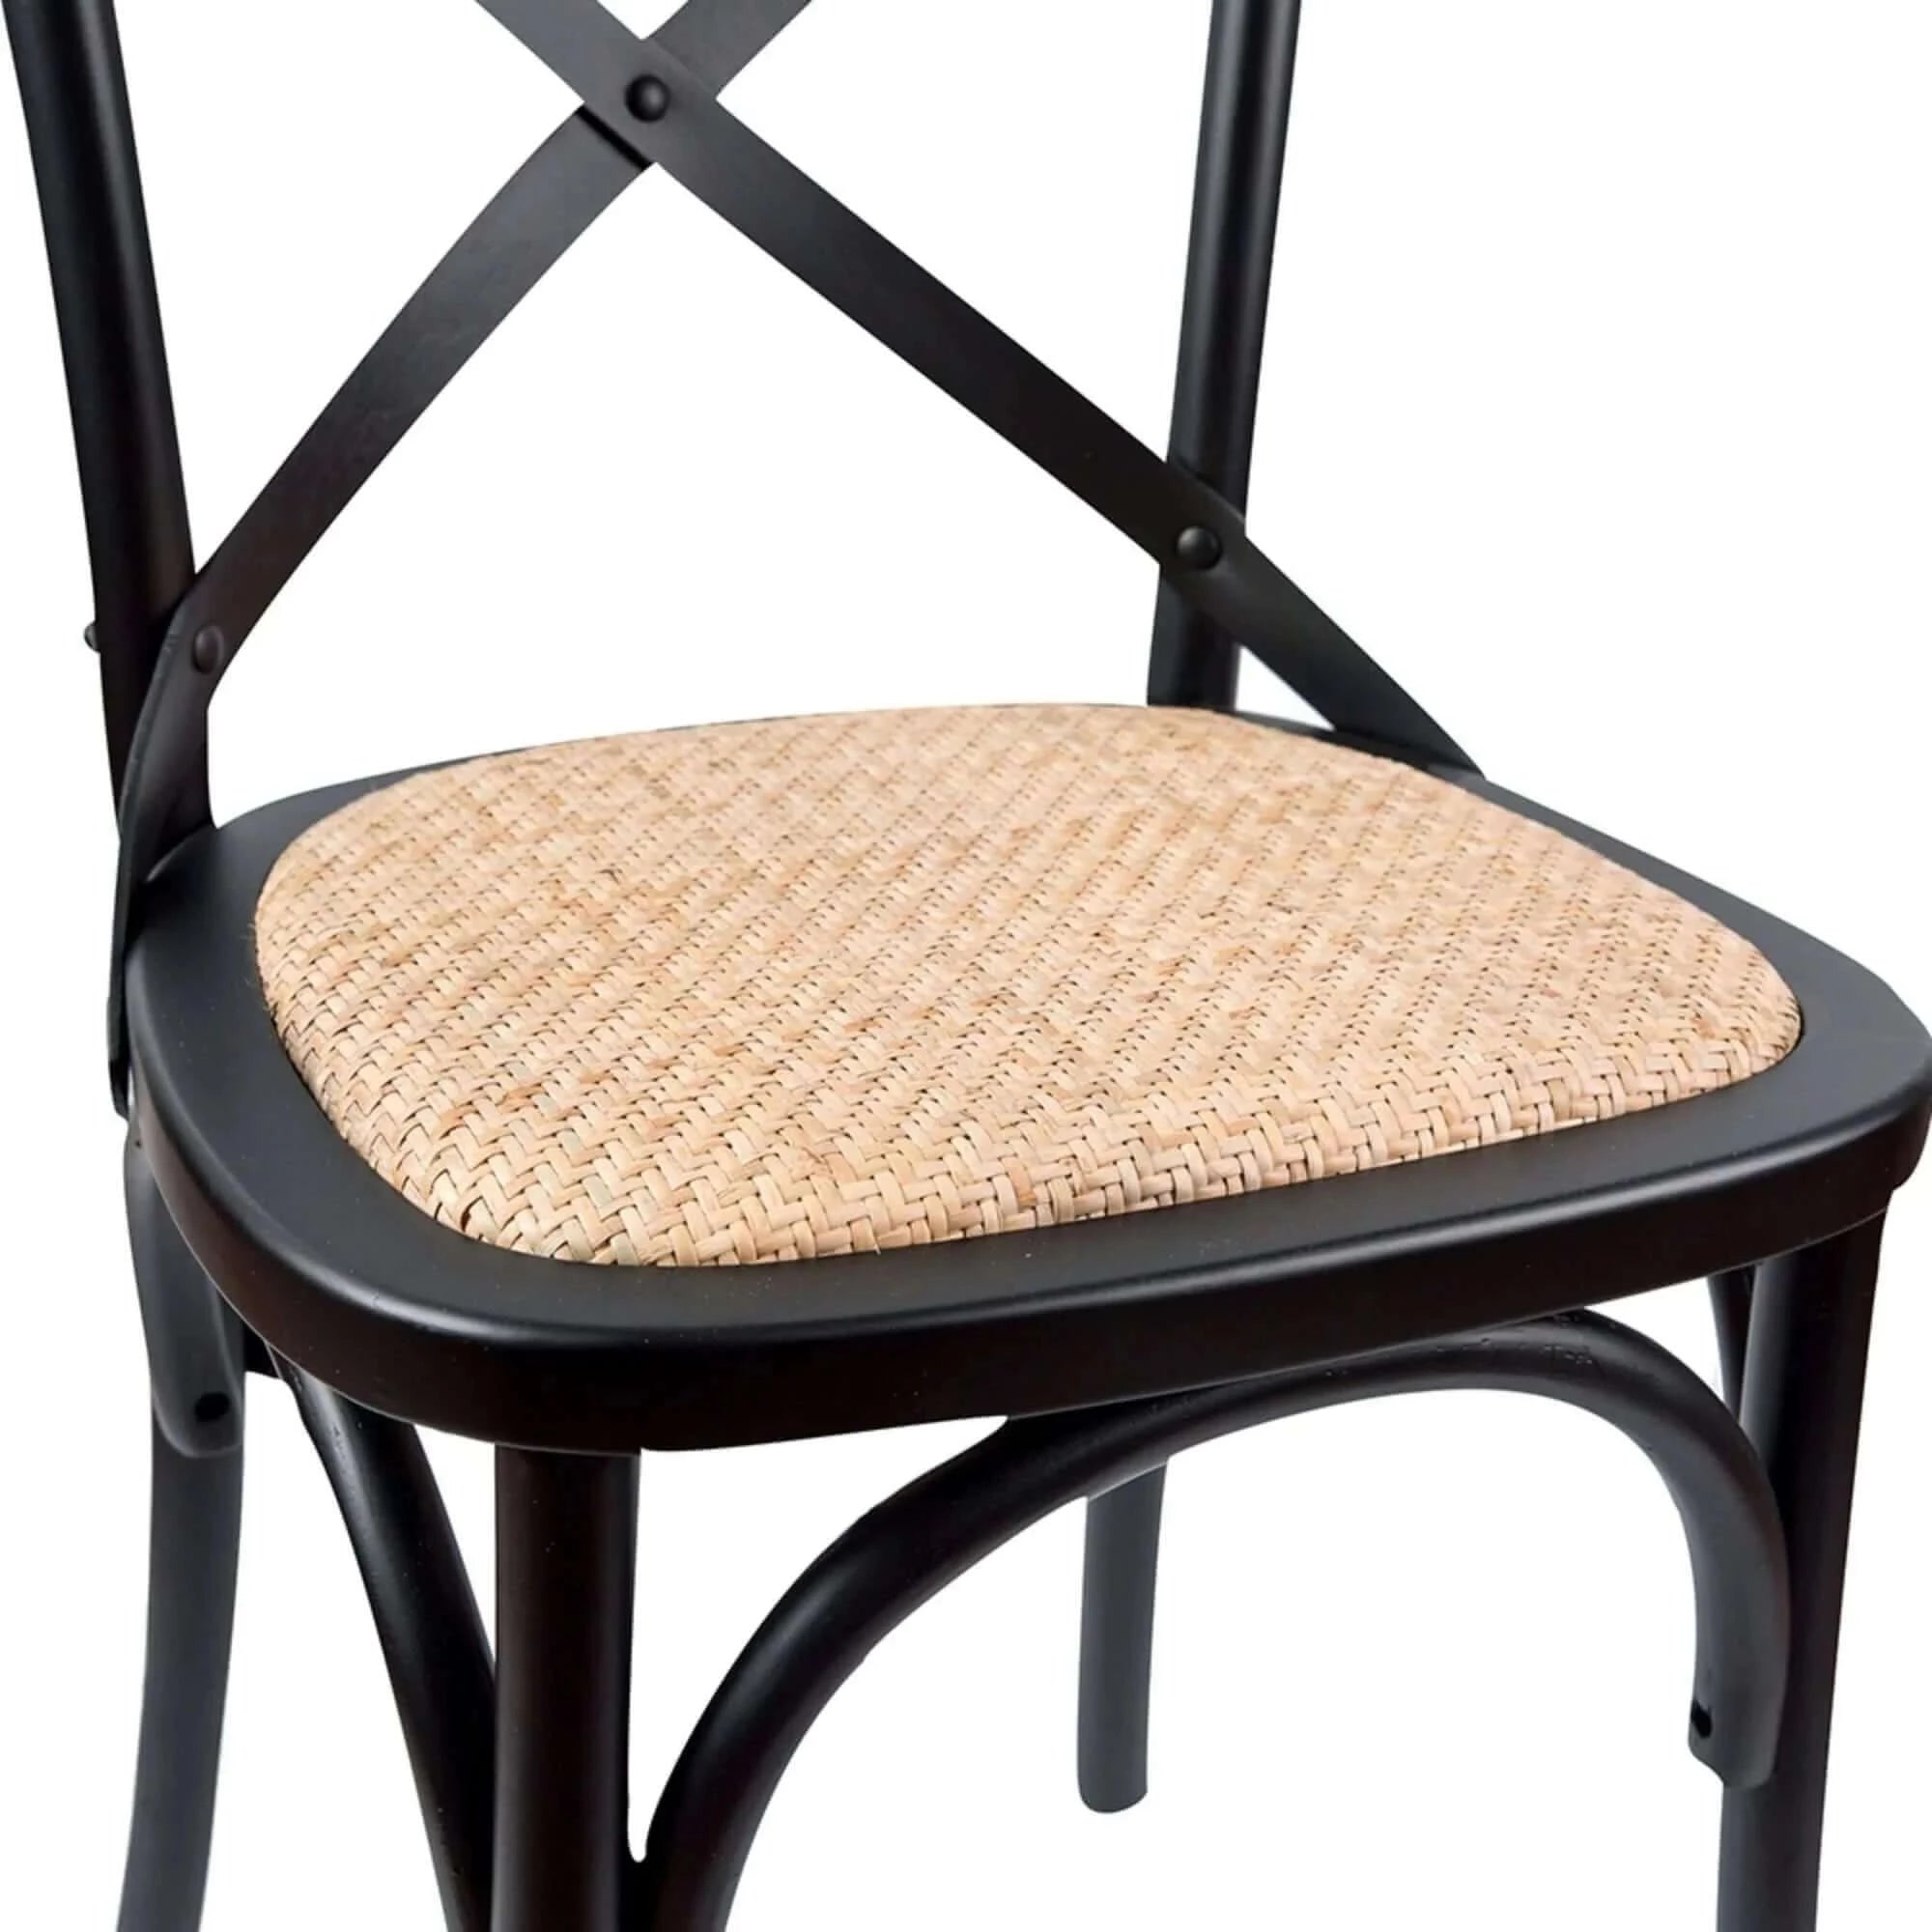 Buy aster crossback dining chair set of 2 solid birch timber wood ratan seat - black - upinteriors-Upinteriors